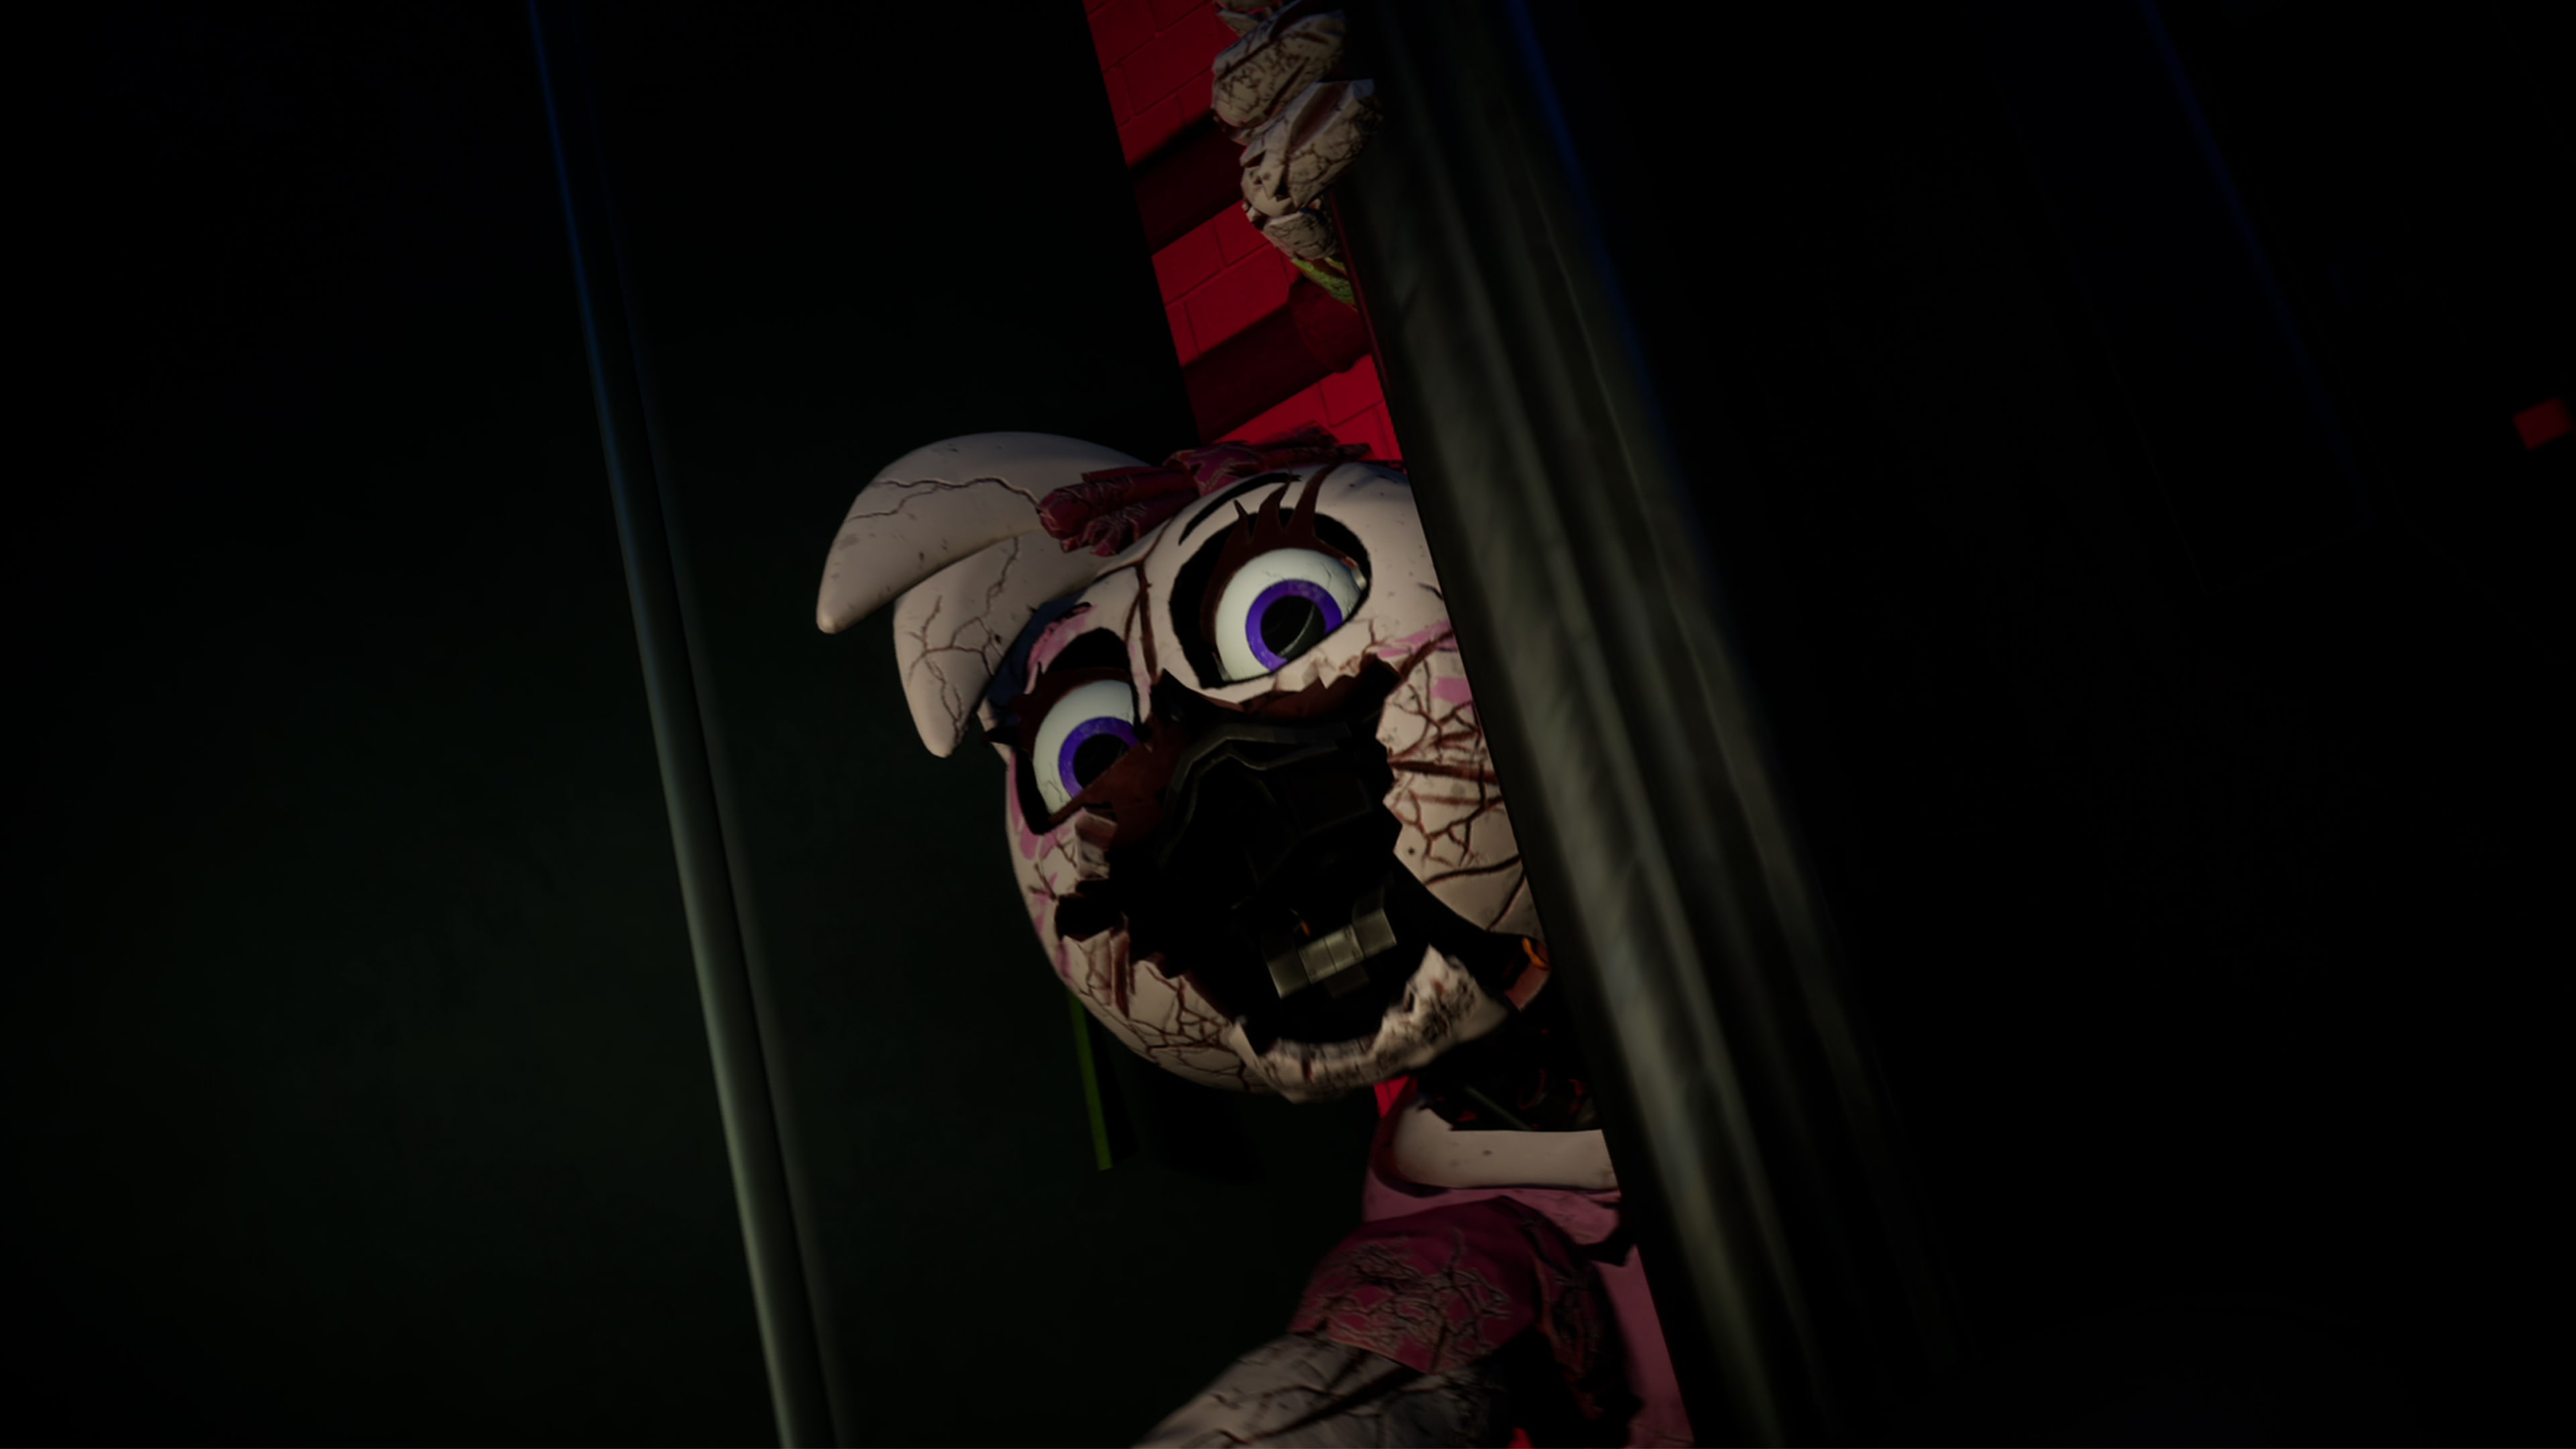 Atualização da PS Store: Five Nights at Freddy's, GRIS, True Fear